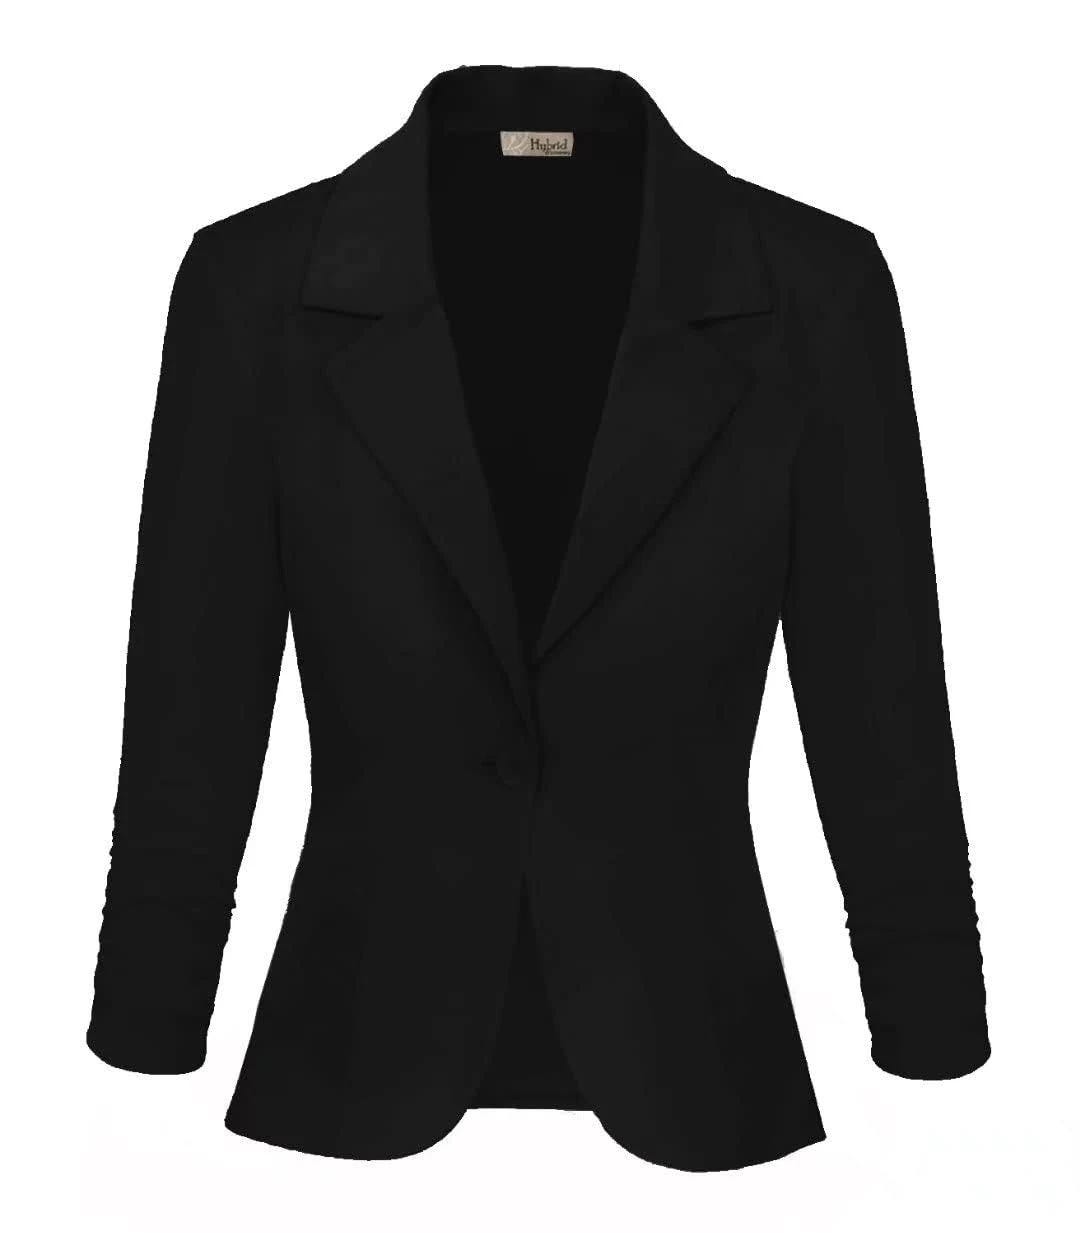 Versatile Black Blazer for Work or Everyday Wear | Image